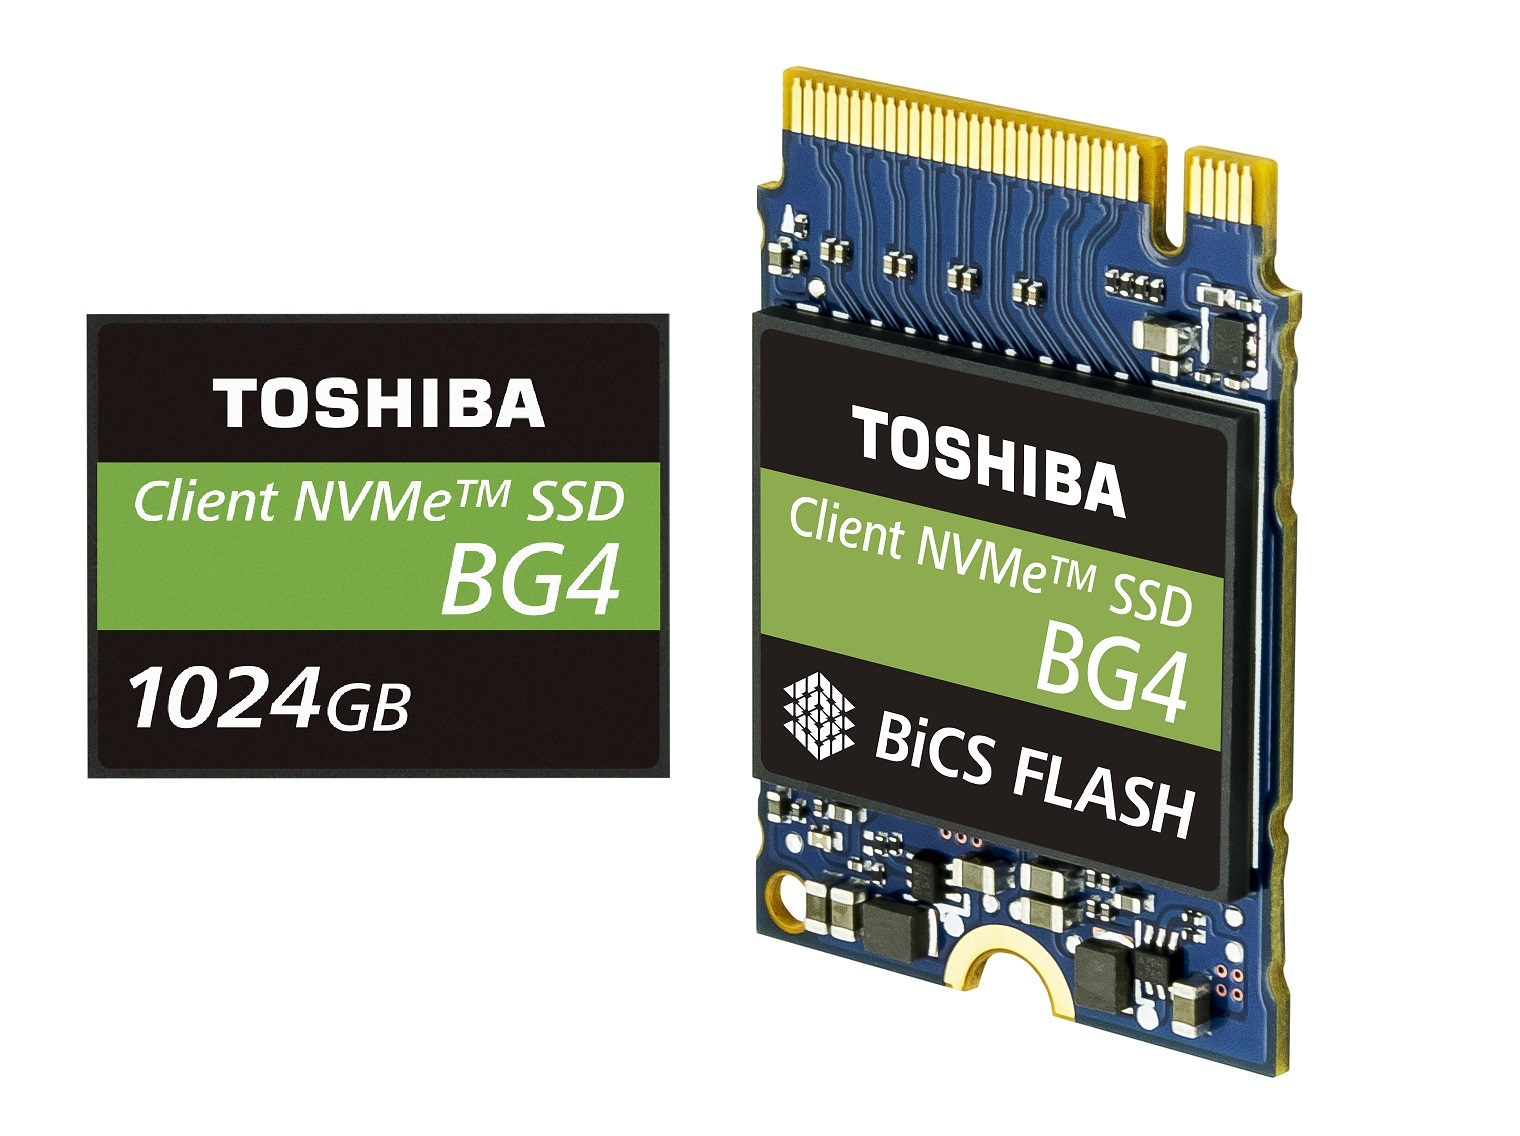 Toshiba BG4 series